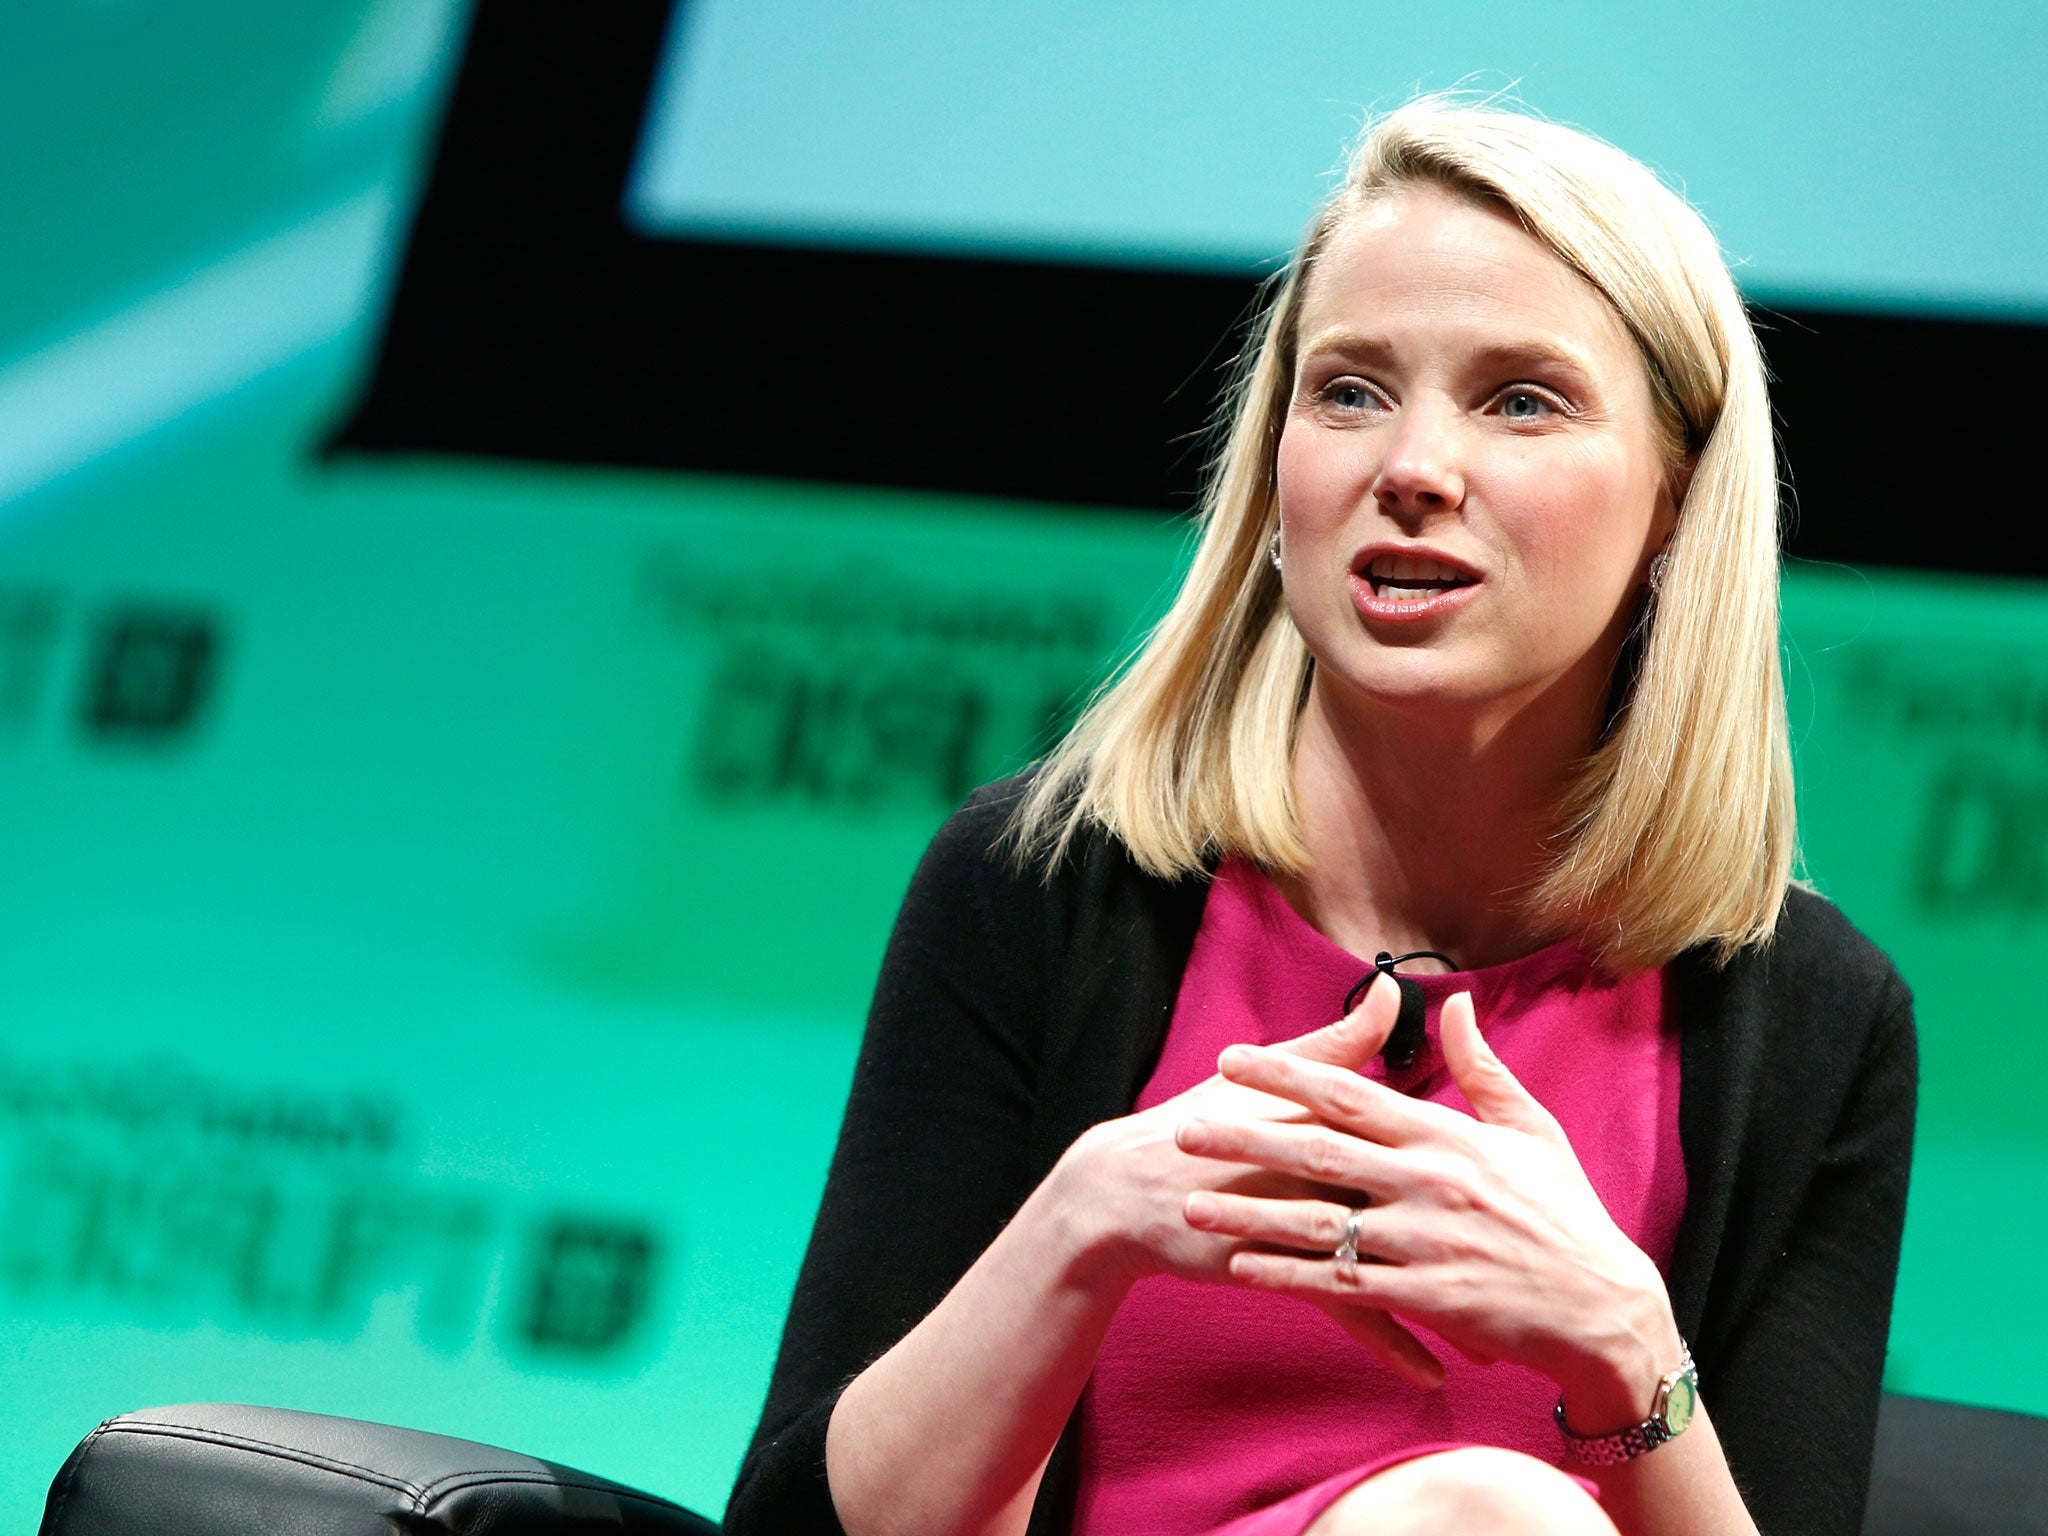 Yahoo! CEO, Marissa Mayer speaks at TechCrunch Disrupt NY 2014